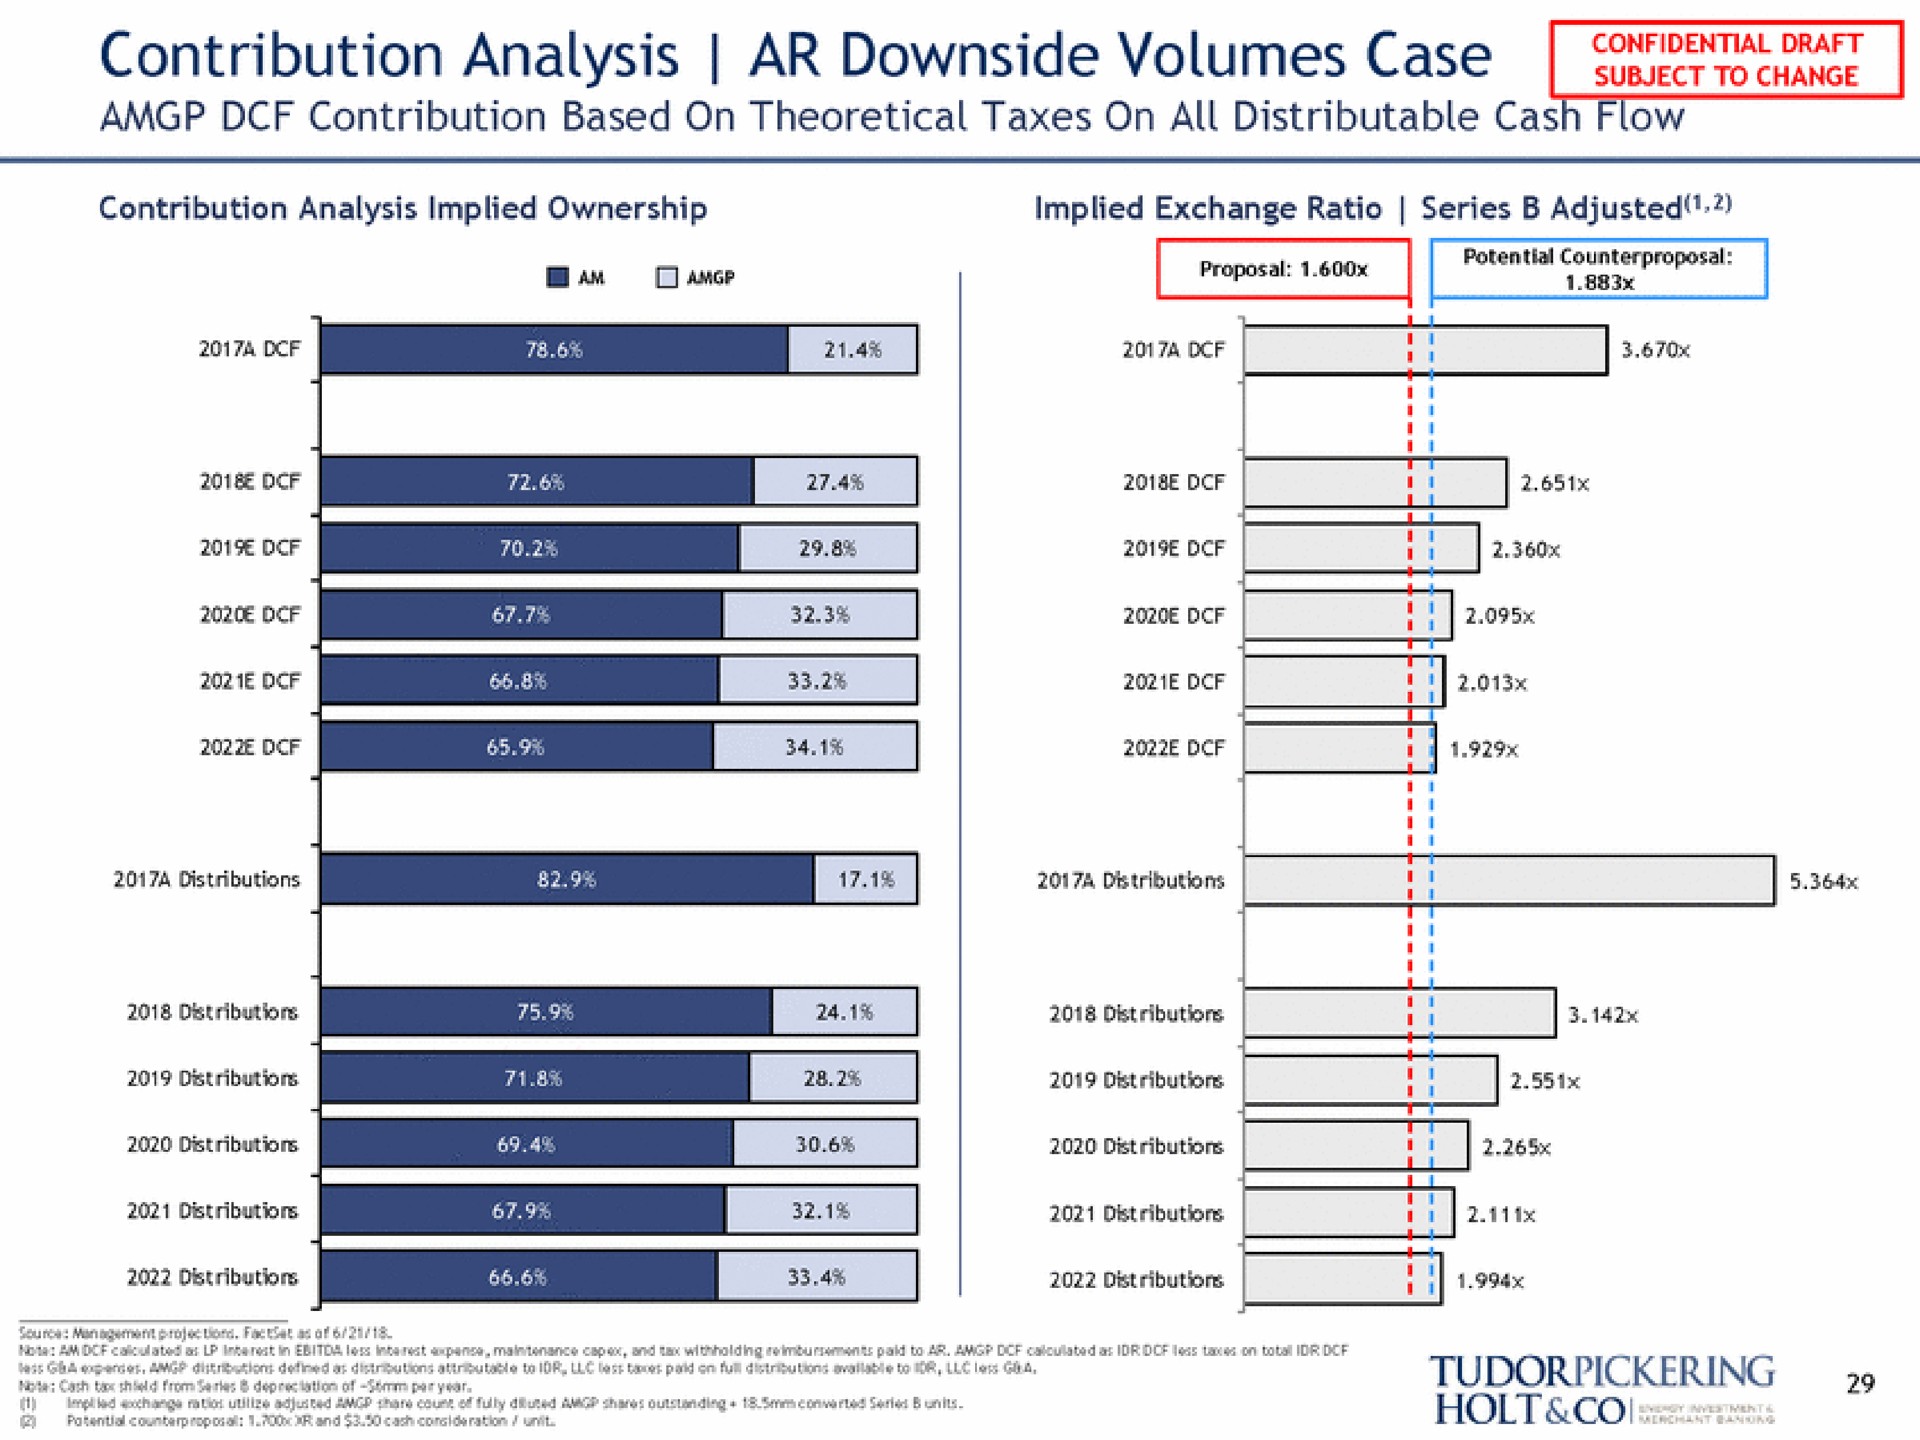 contribution analysis downside volumes case | Tudor, Pickering, Holt & Co